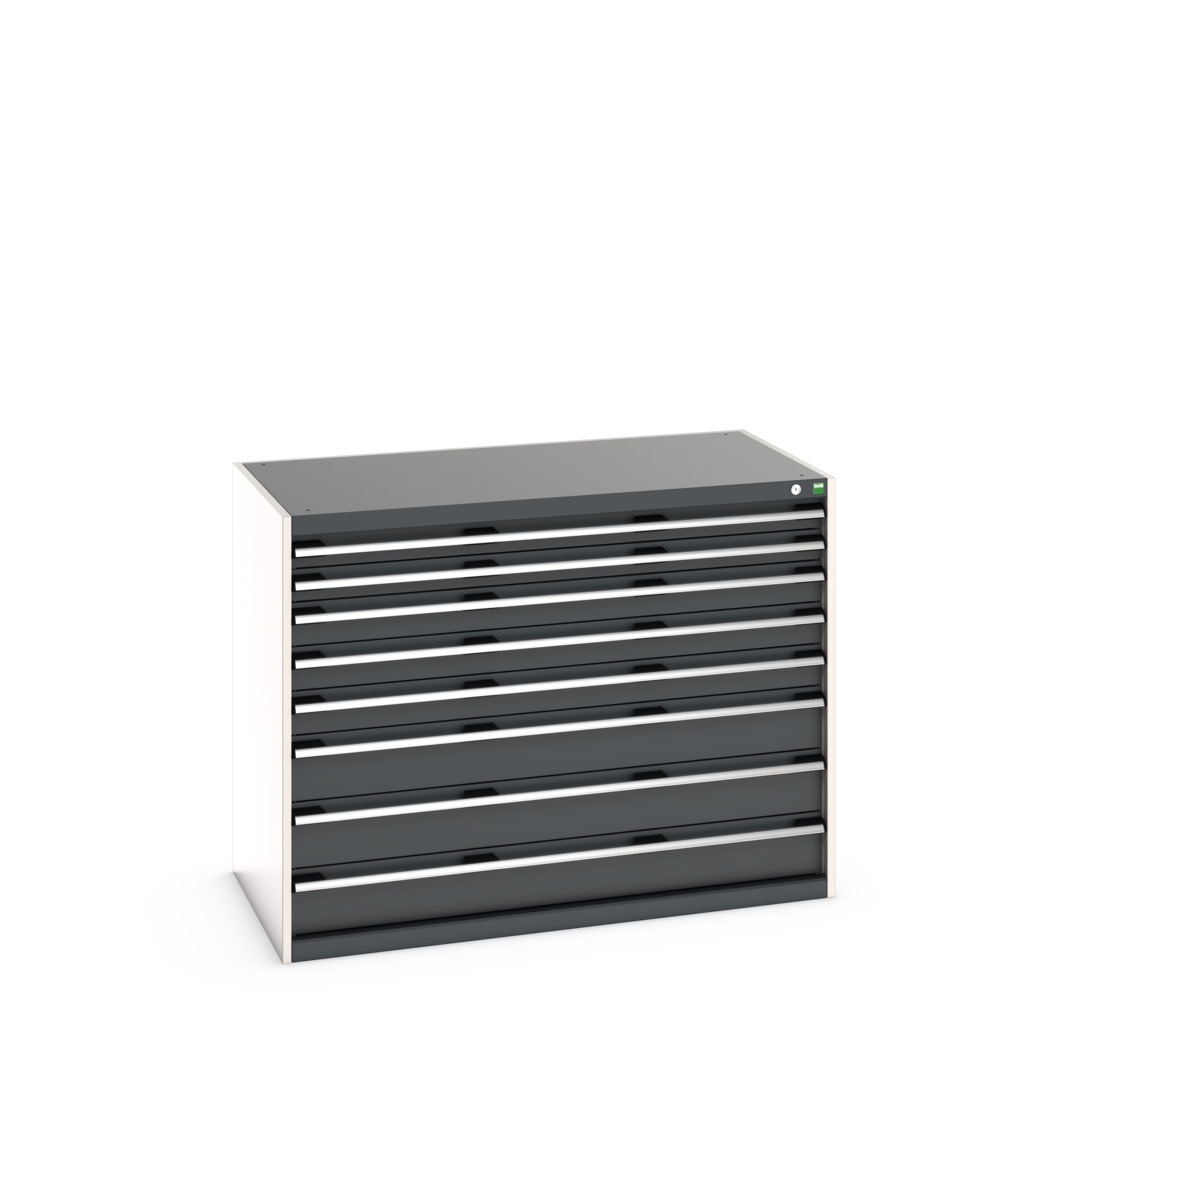 40030019. - cubio drawer cabinet